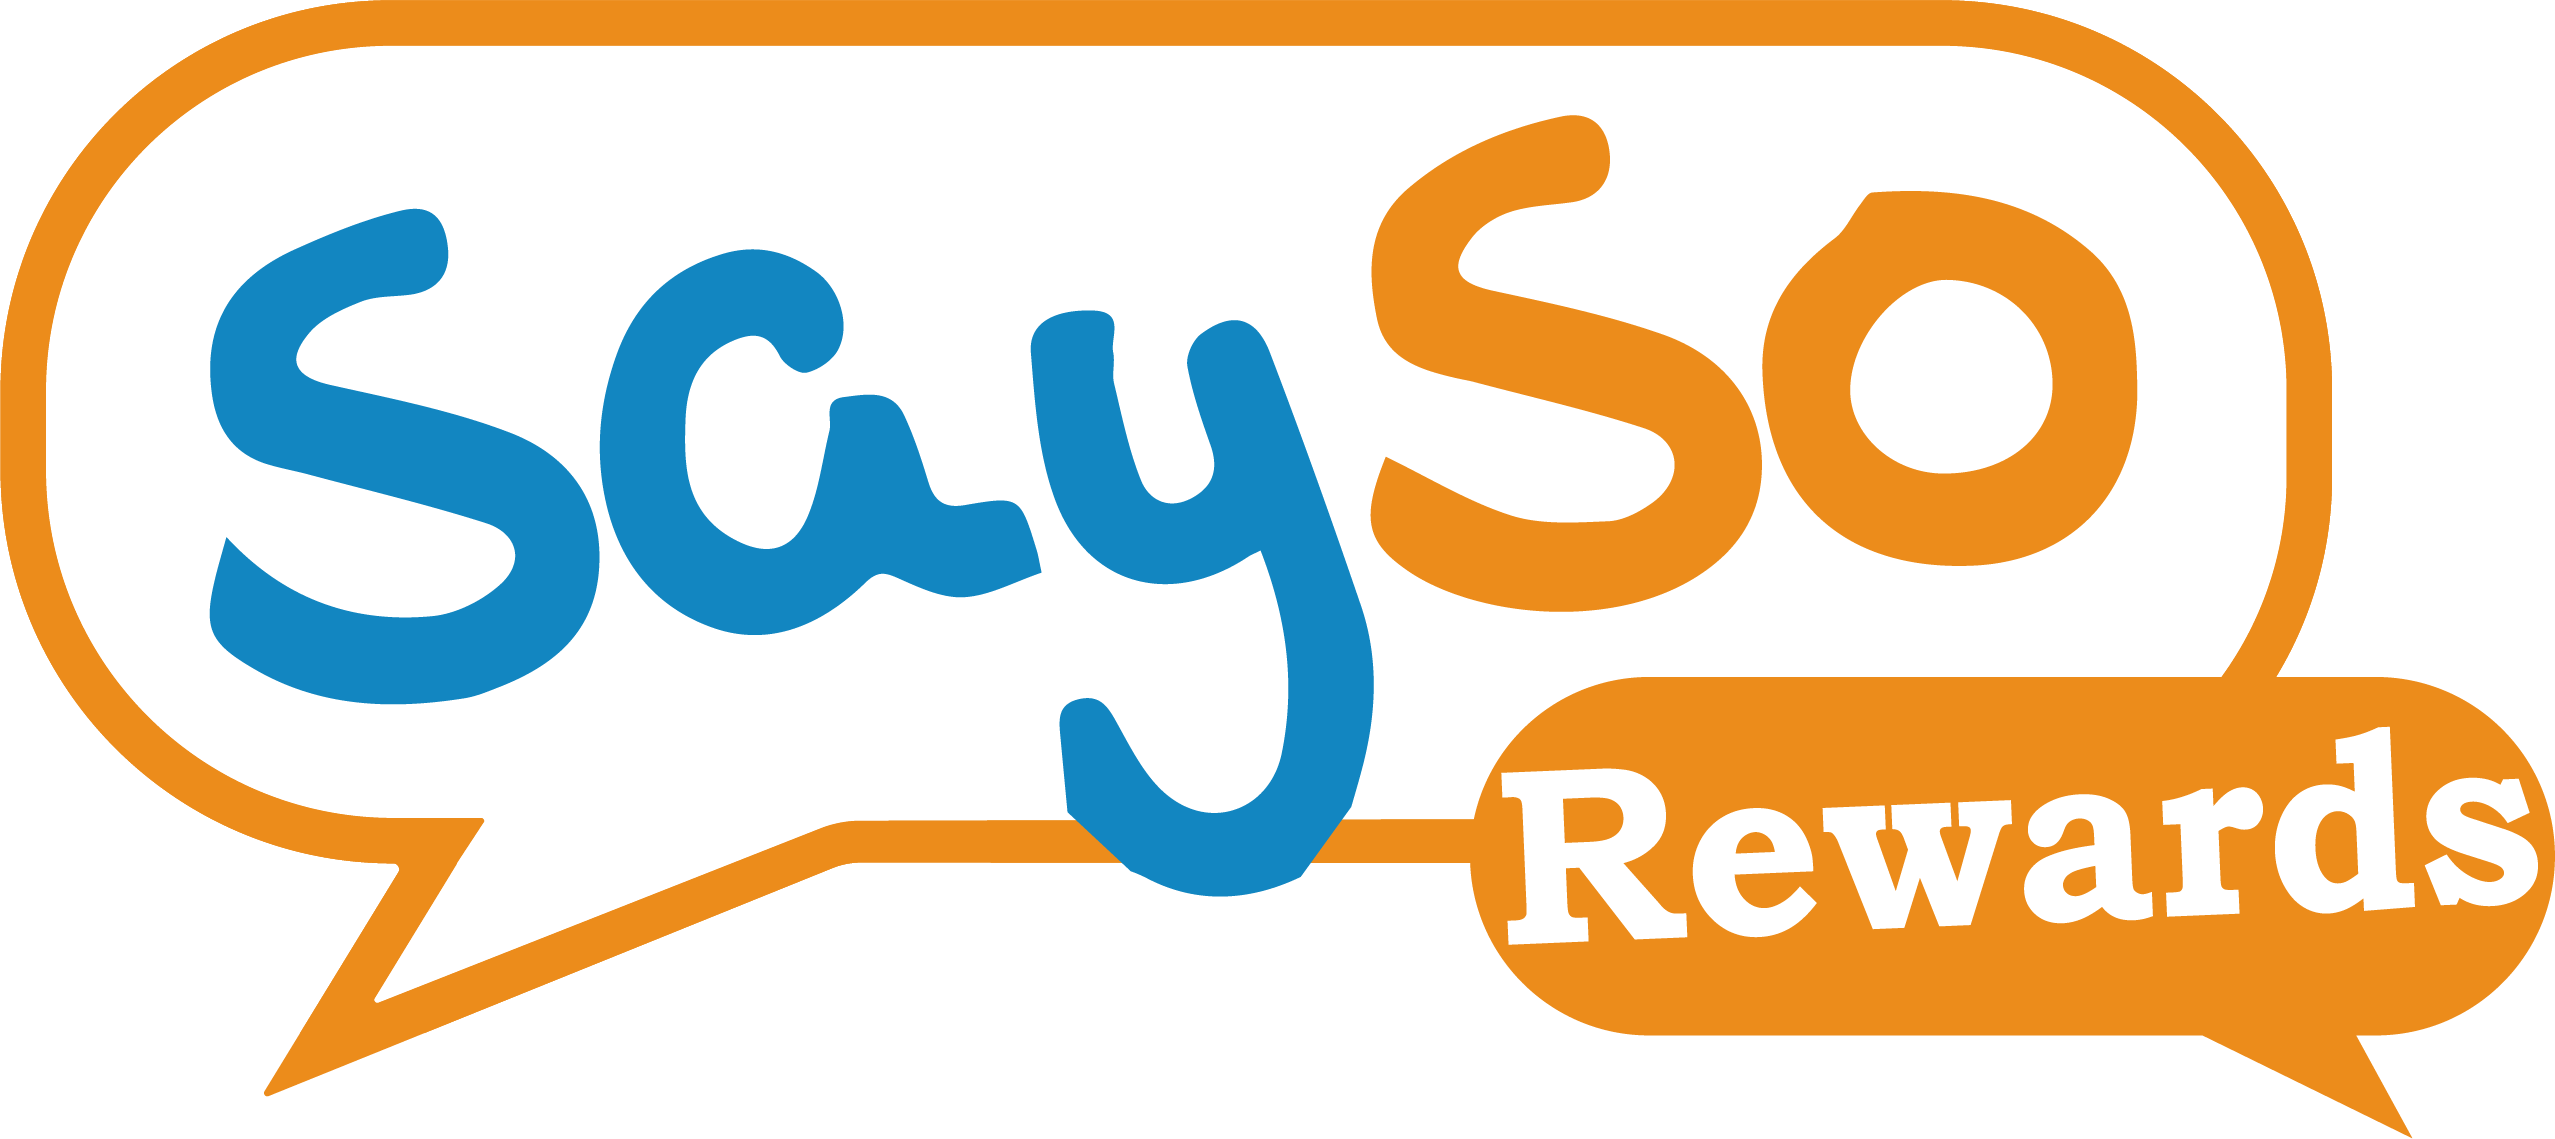 SaySo Rewards Blog Logo